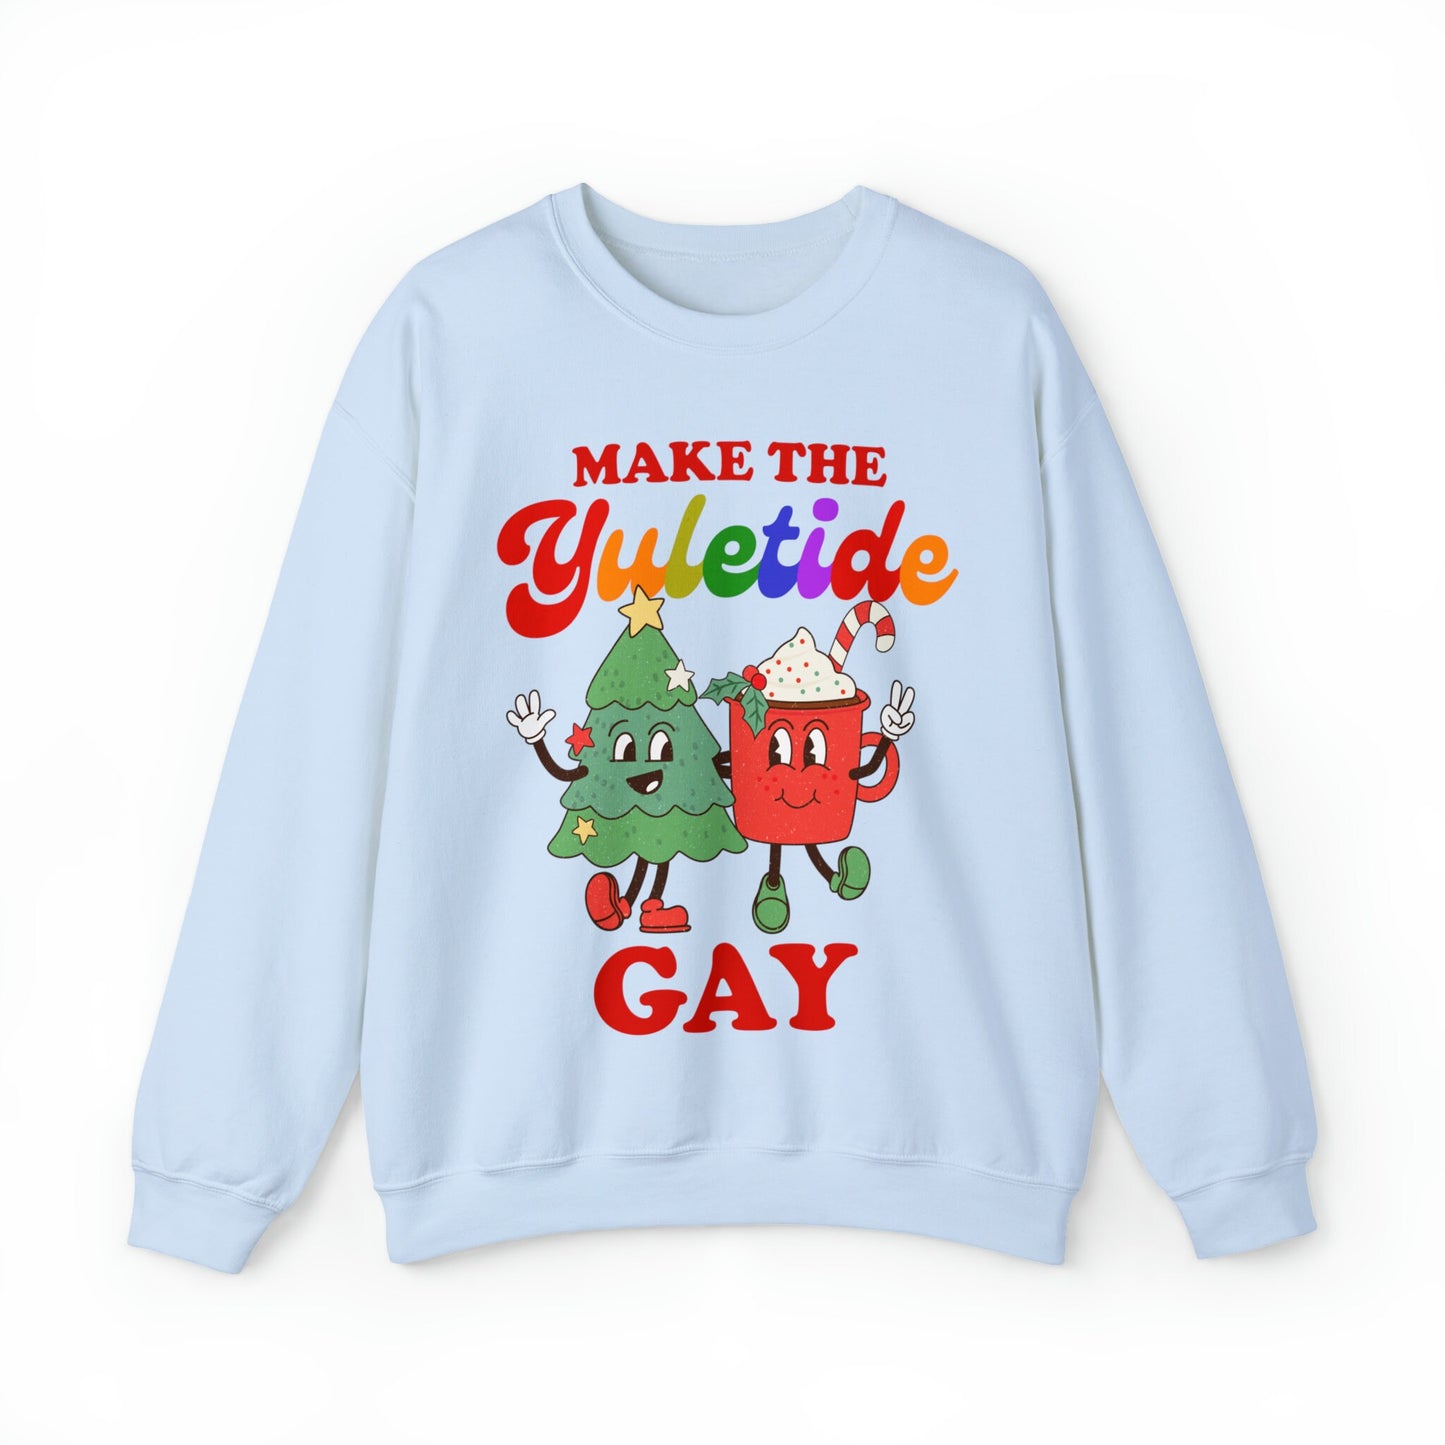 Make the yuletide gay sweatshirt